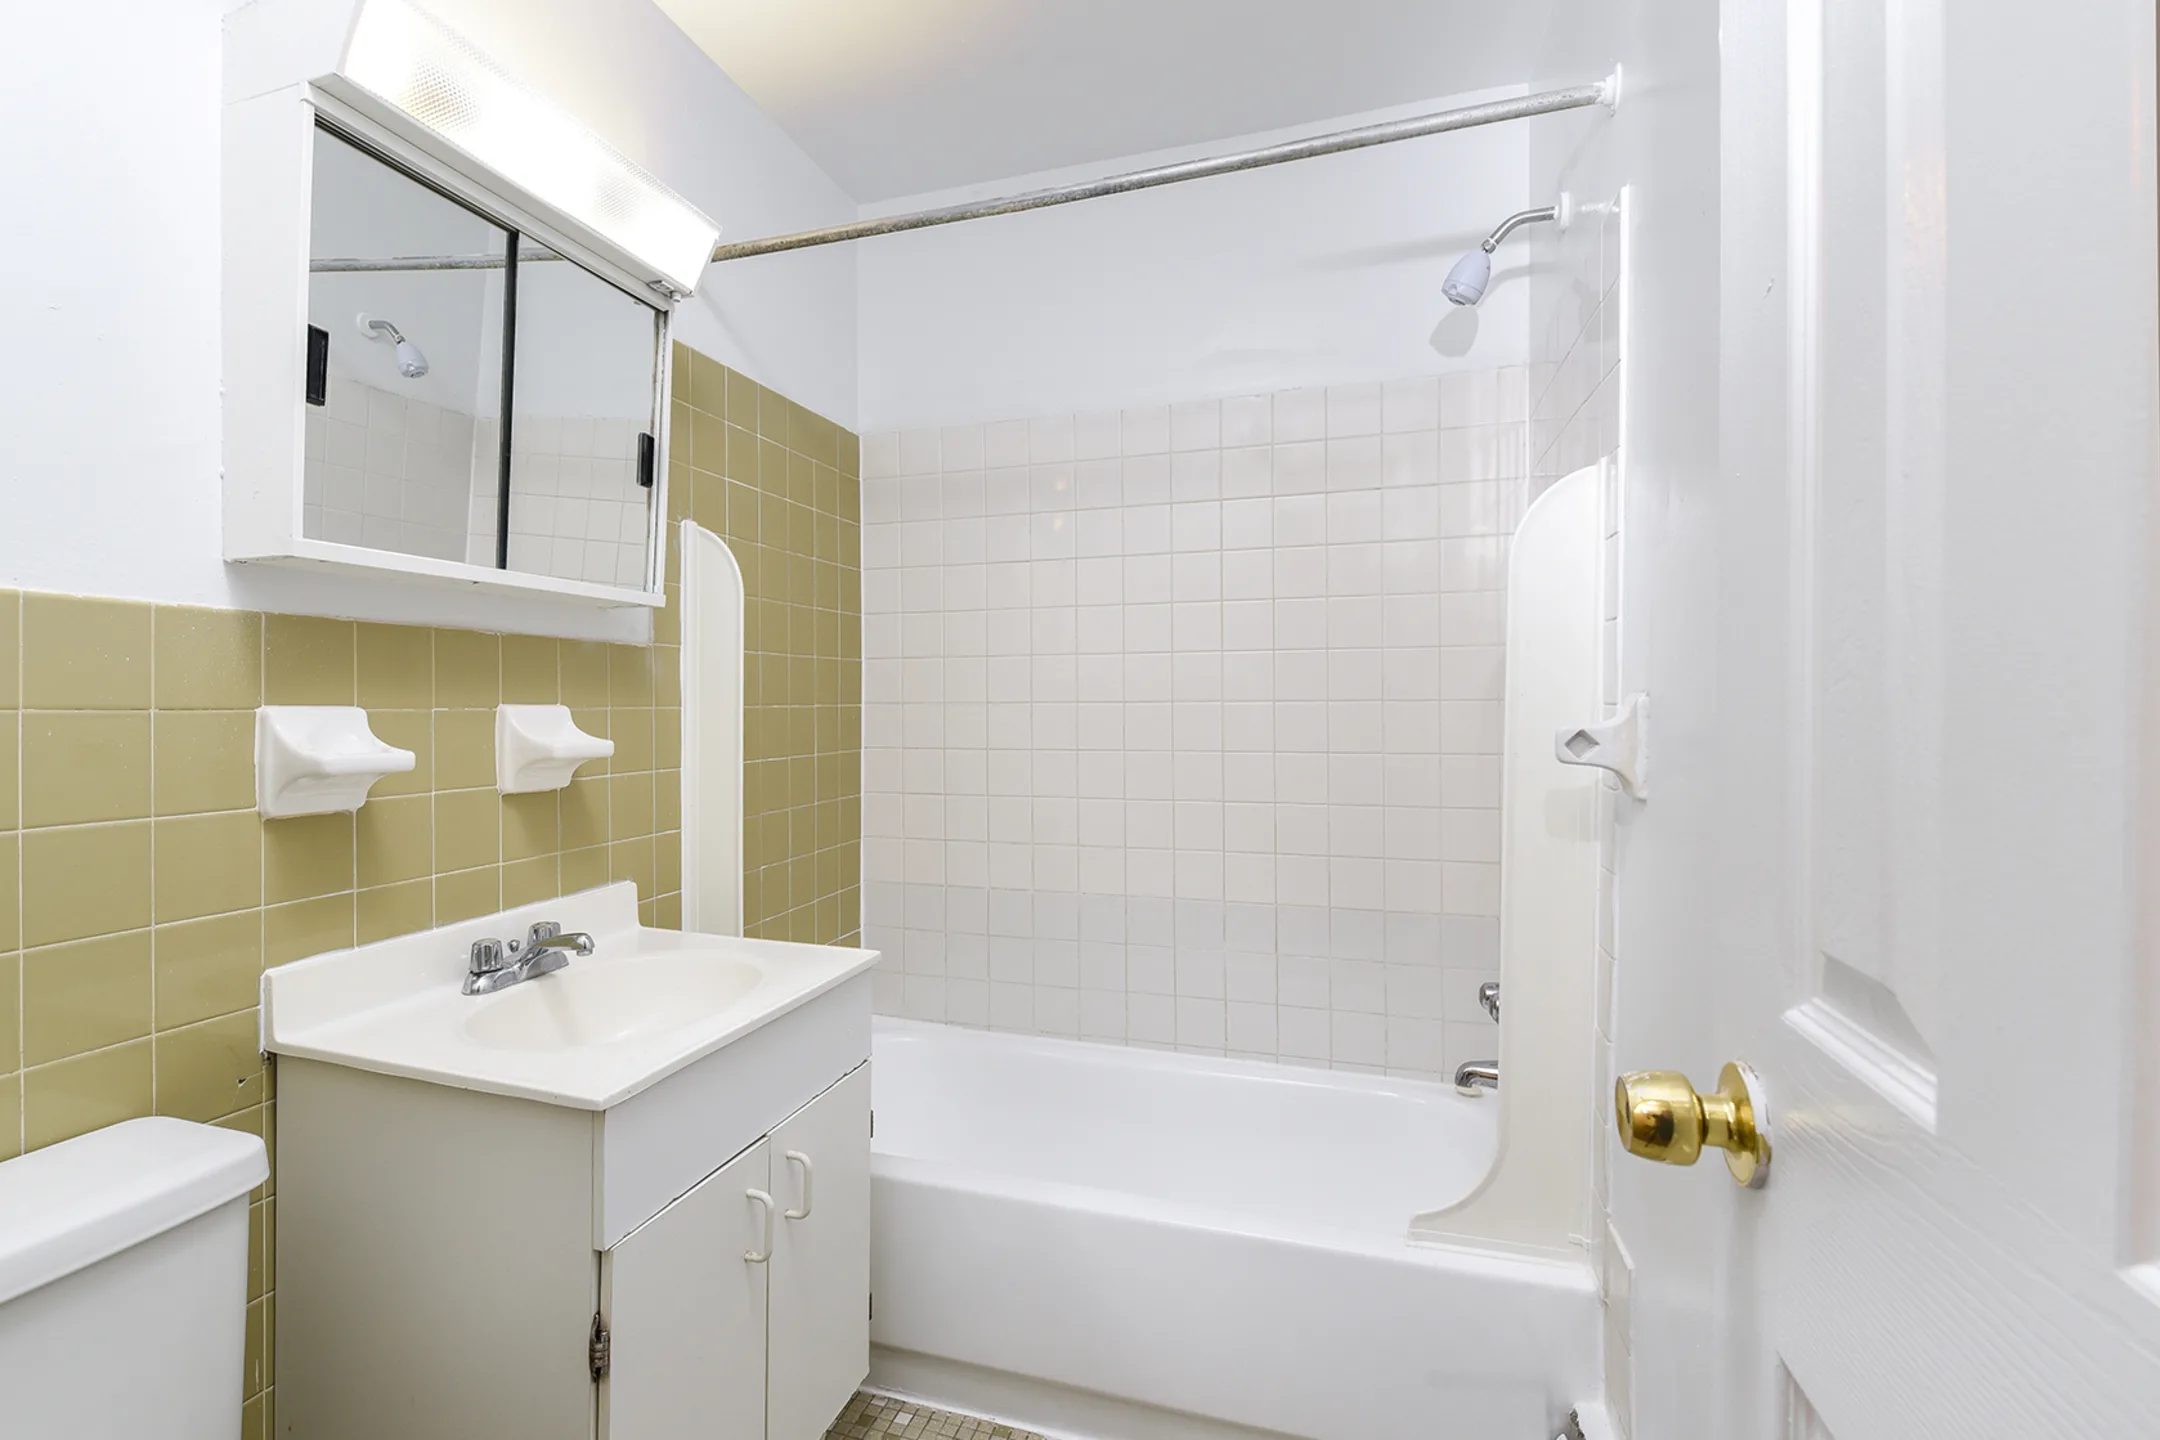 Bathroom - Cramer Hill Apartments & Townhomes - Camden, NJ